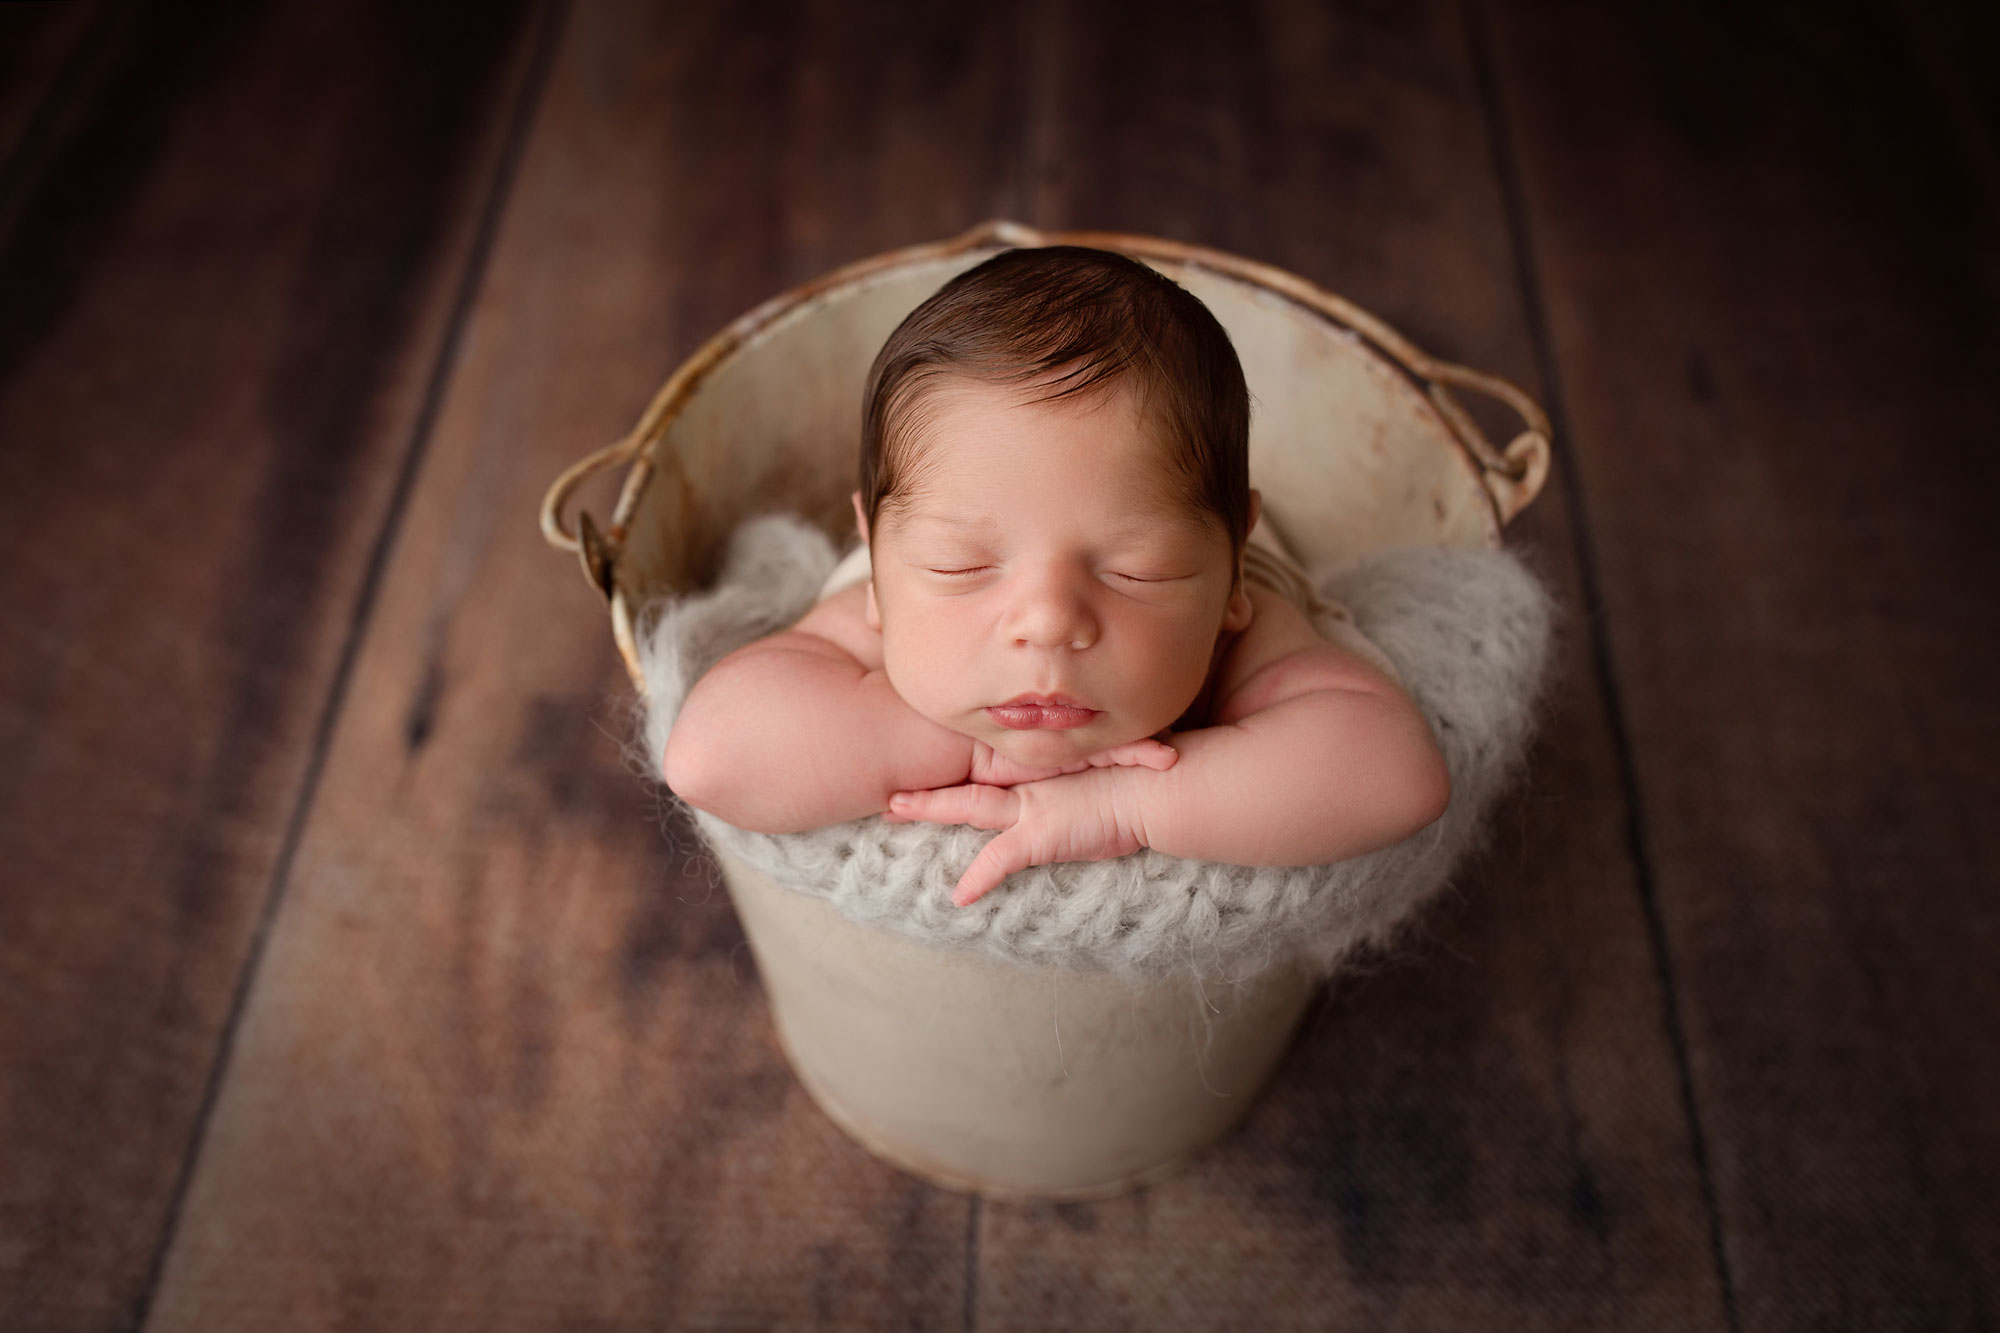 morris county newborn photo session, baby boy asleep in rustic bucket